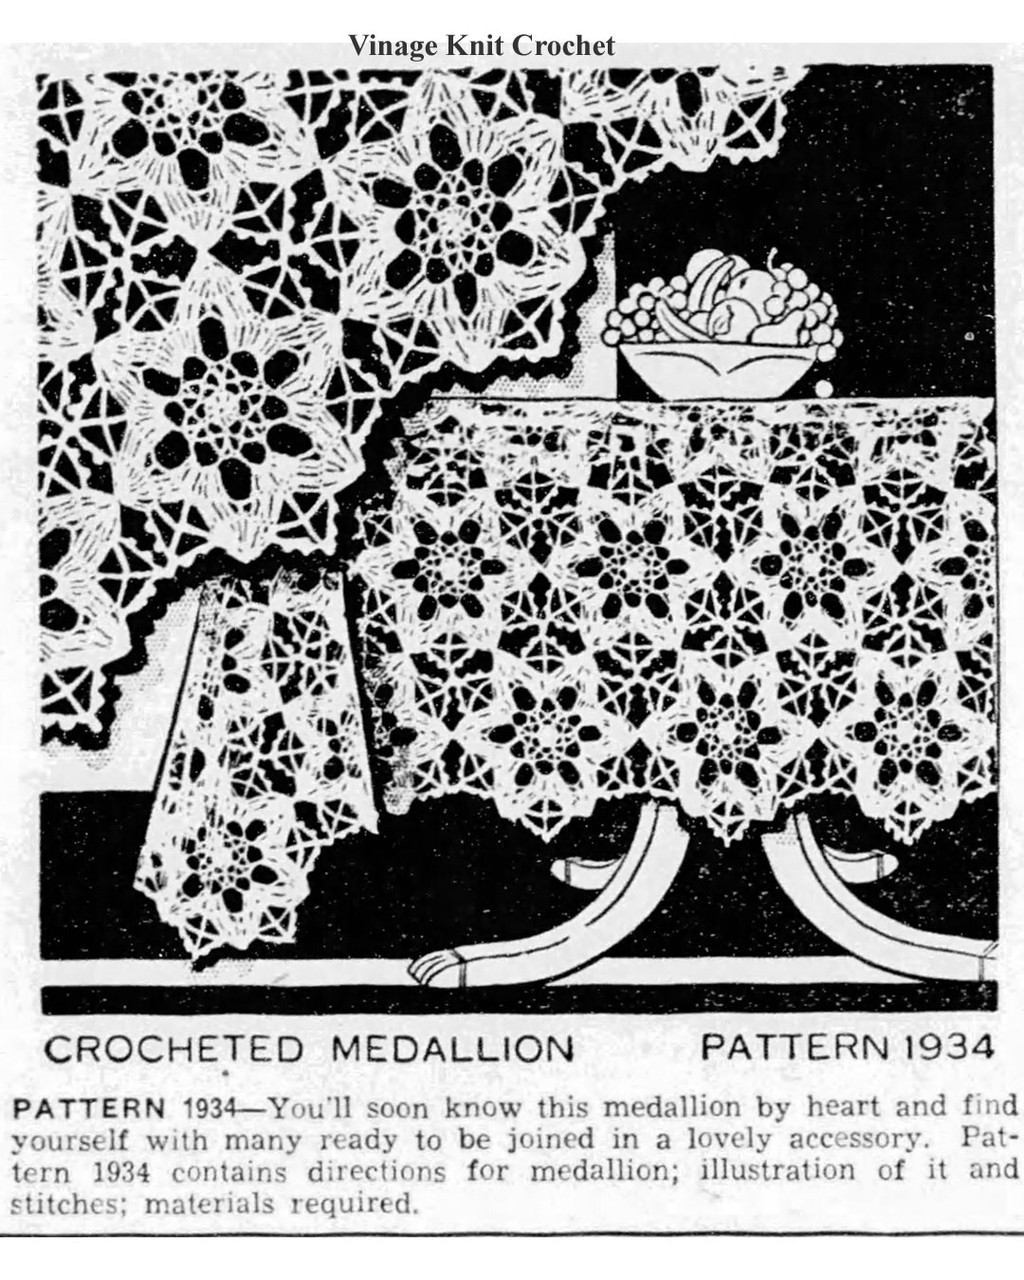 Mail Order Design 1934 Crochet Medallion Newspaper Advertisement